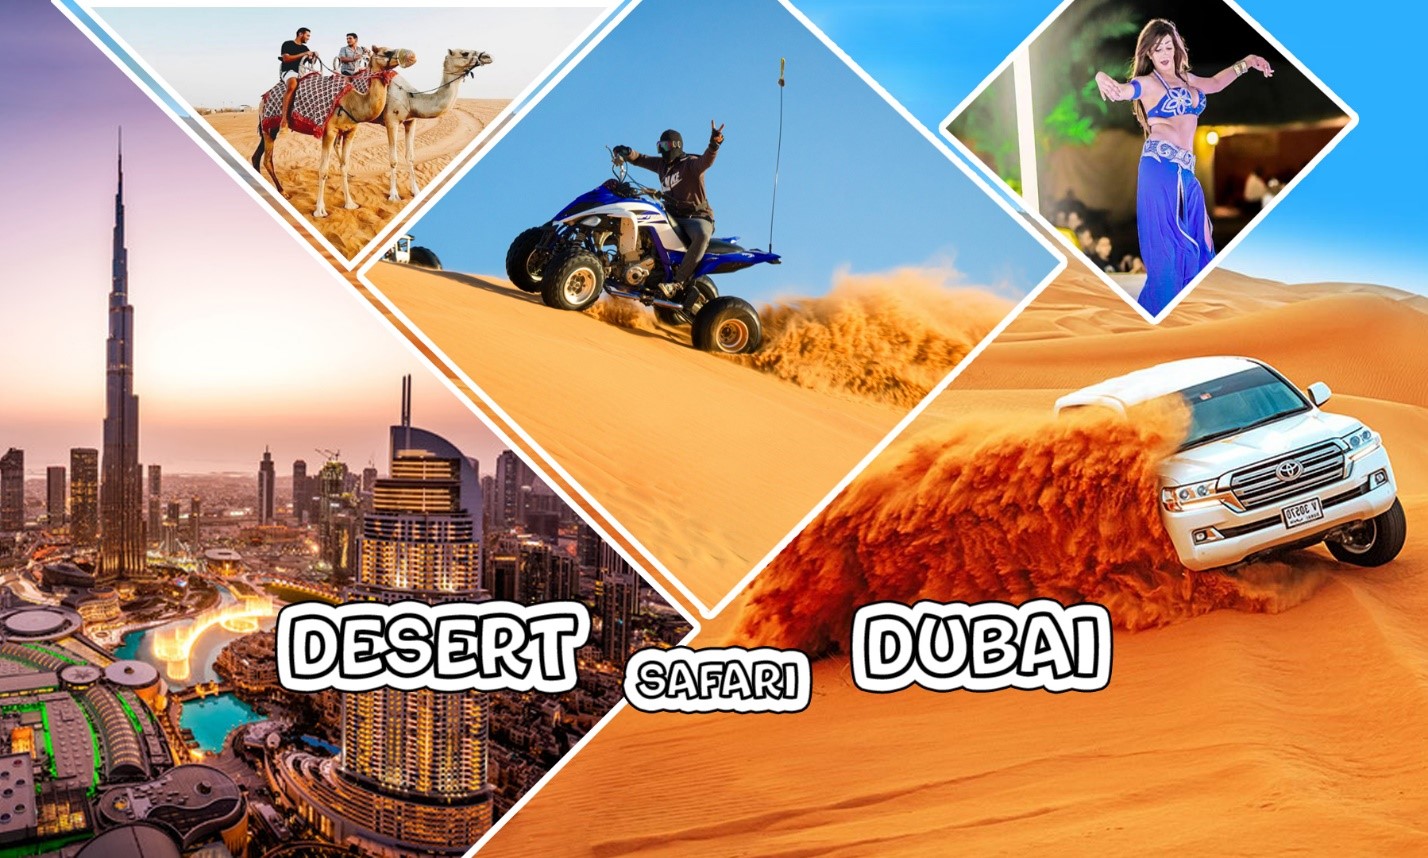 dubai desert safari tour operators